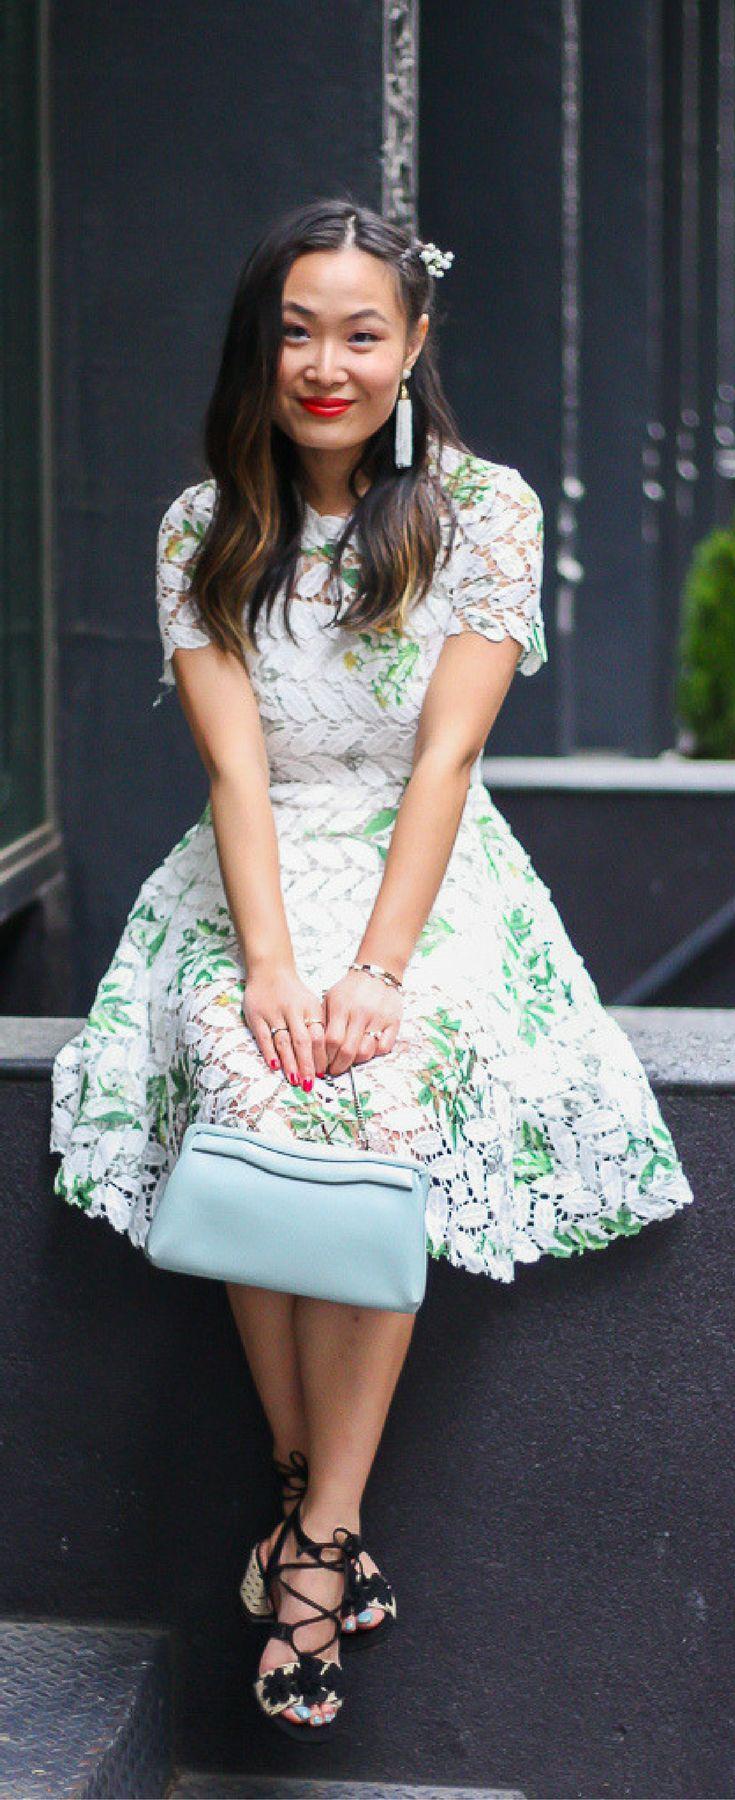 Hochzeit - How To Look Feminine: White Crochet Dress